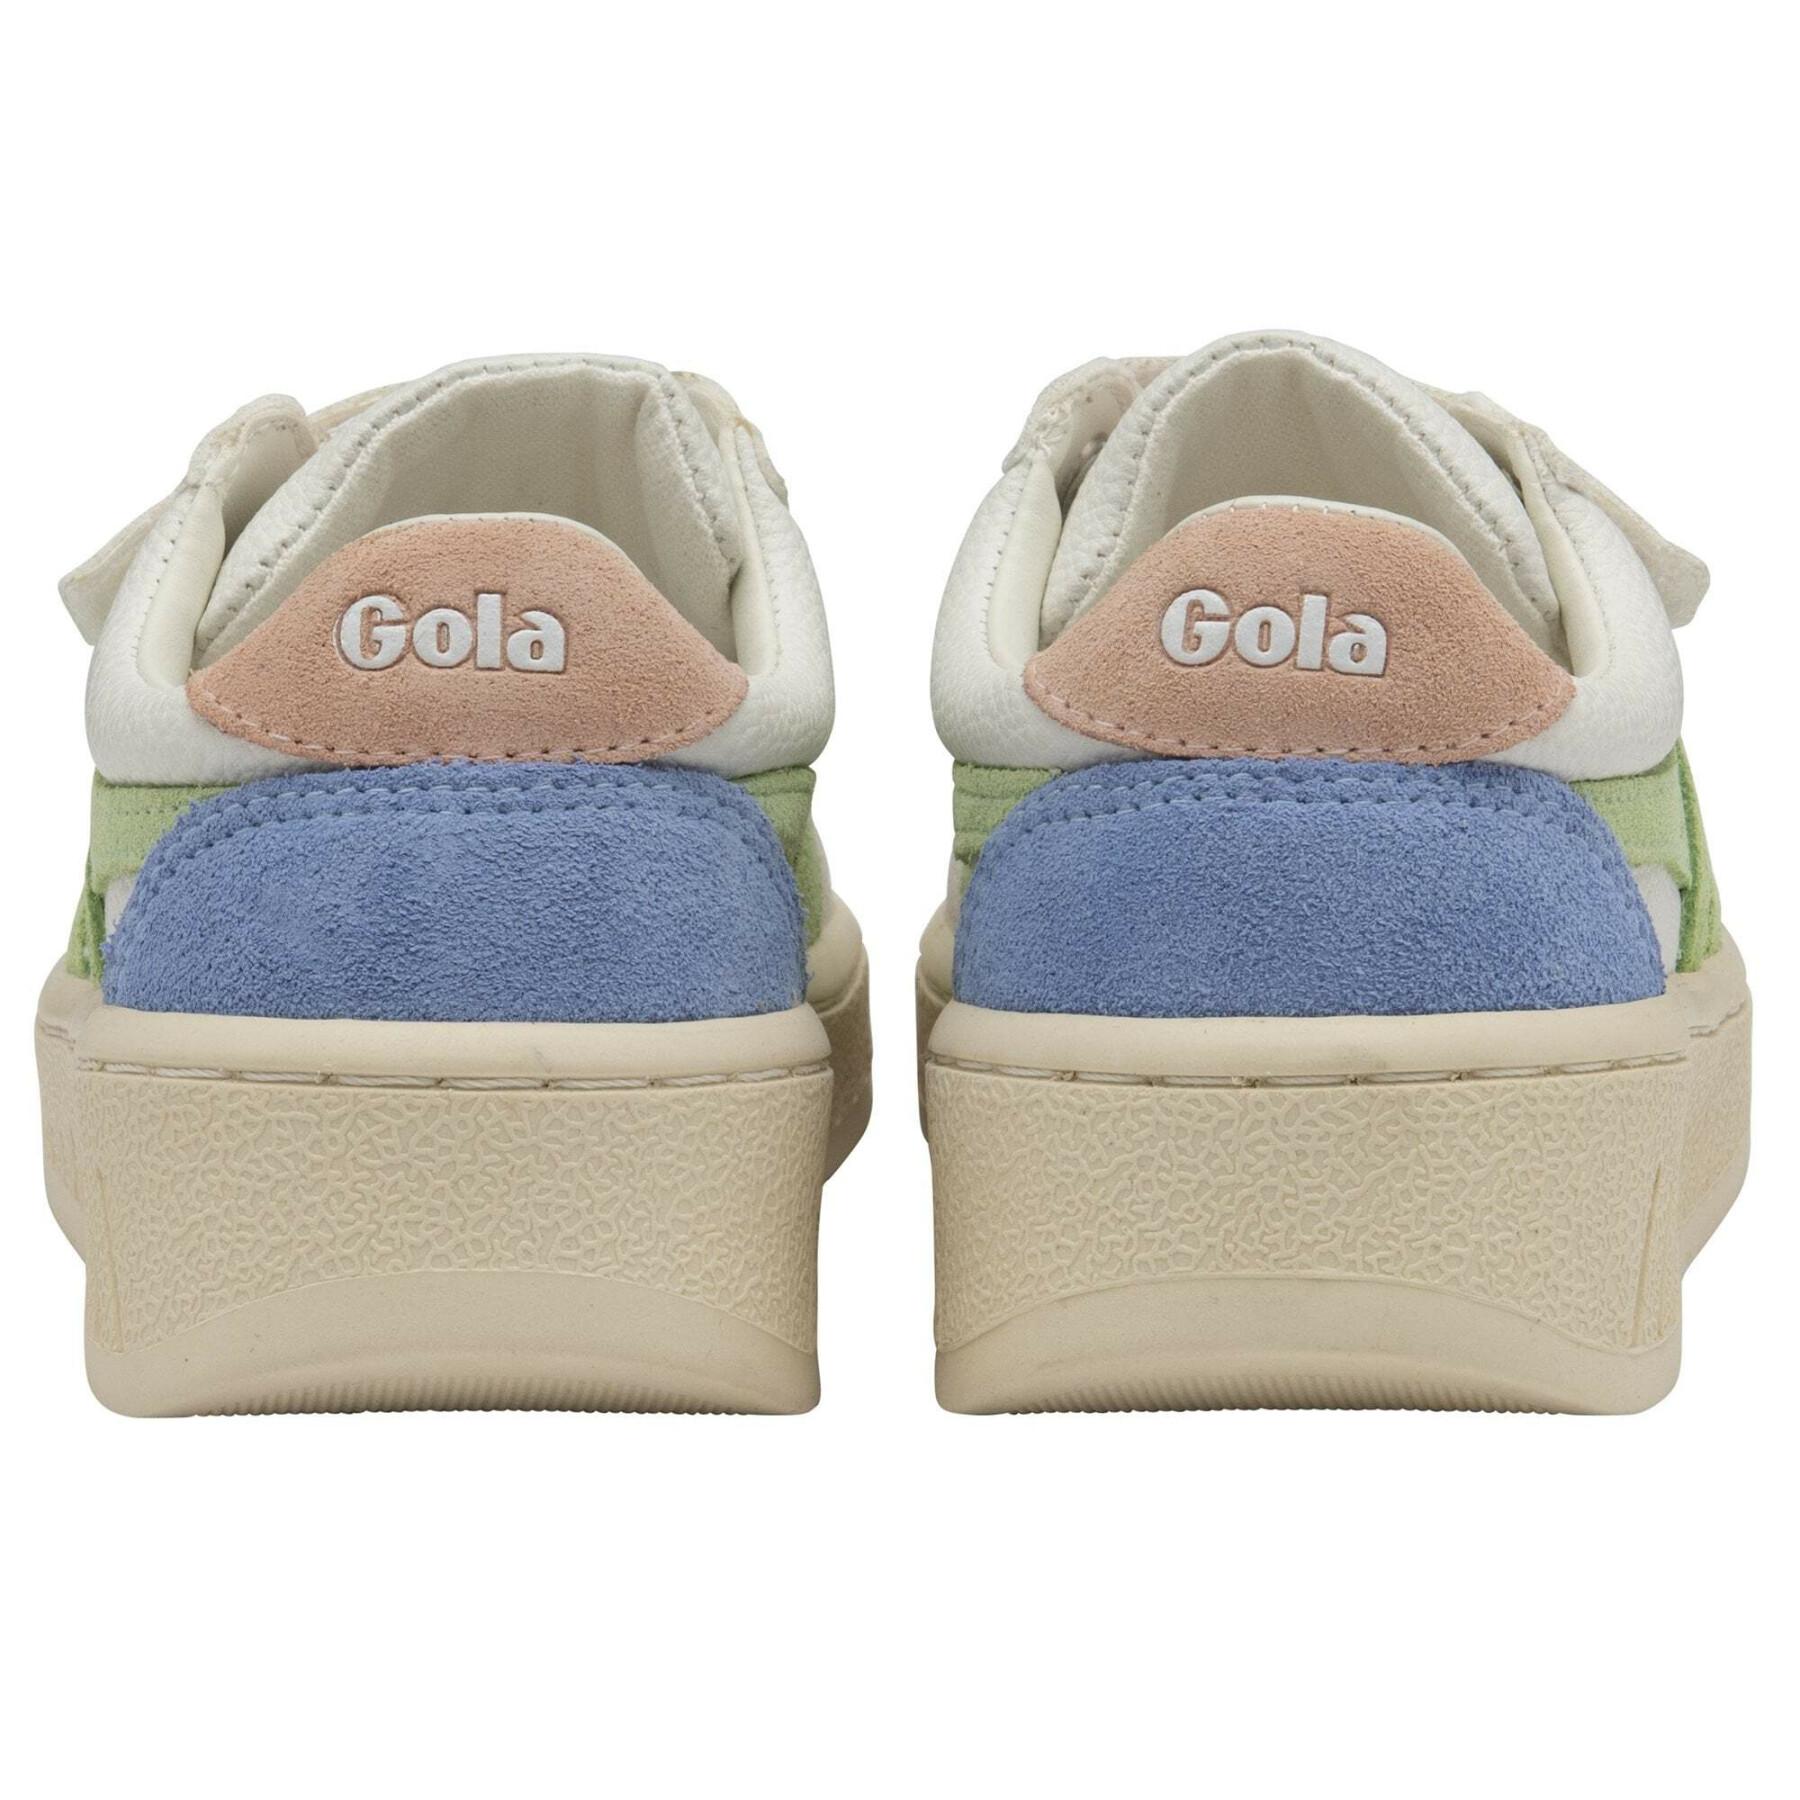 Children's sneakers Gola Classics Grandslam Trident Strap Trainers